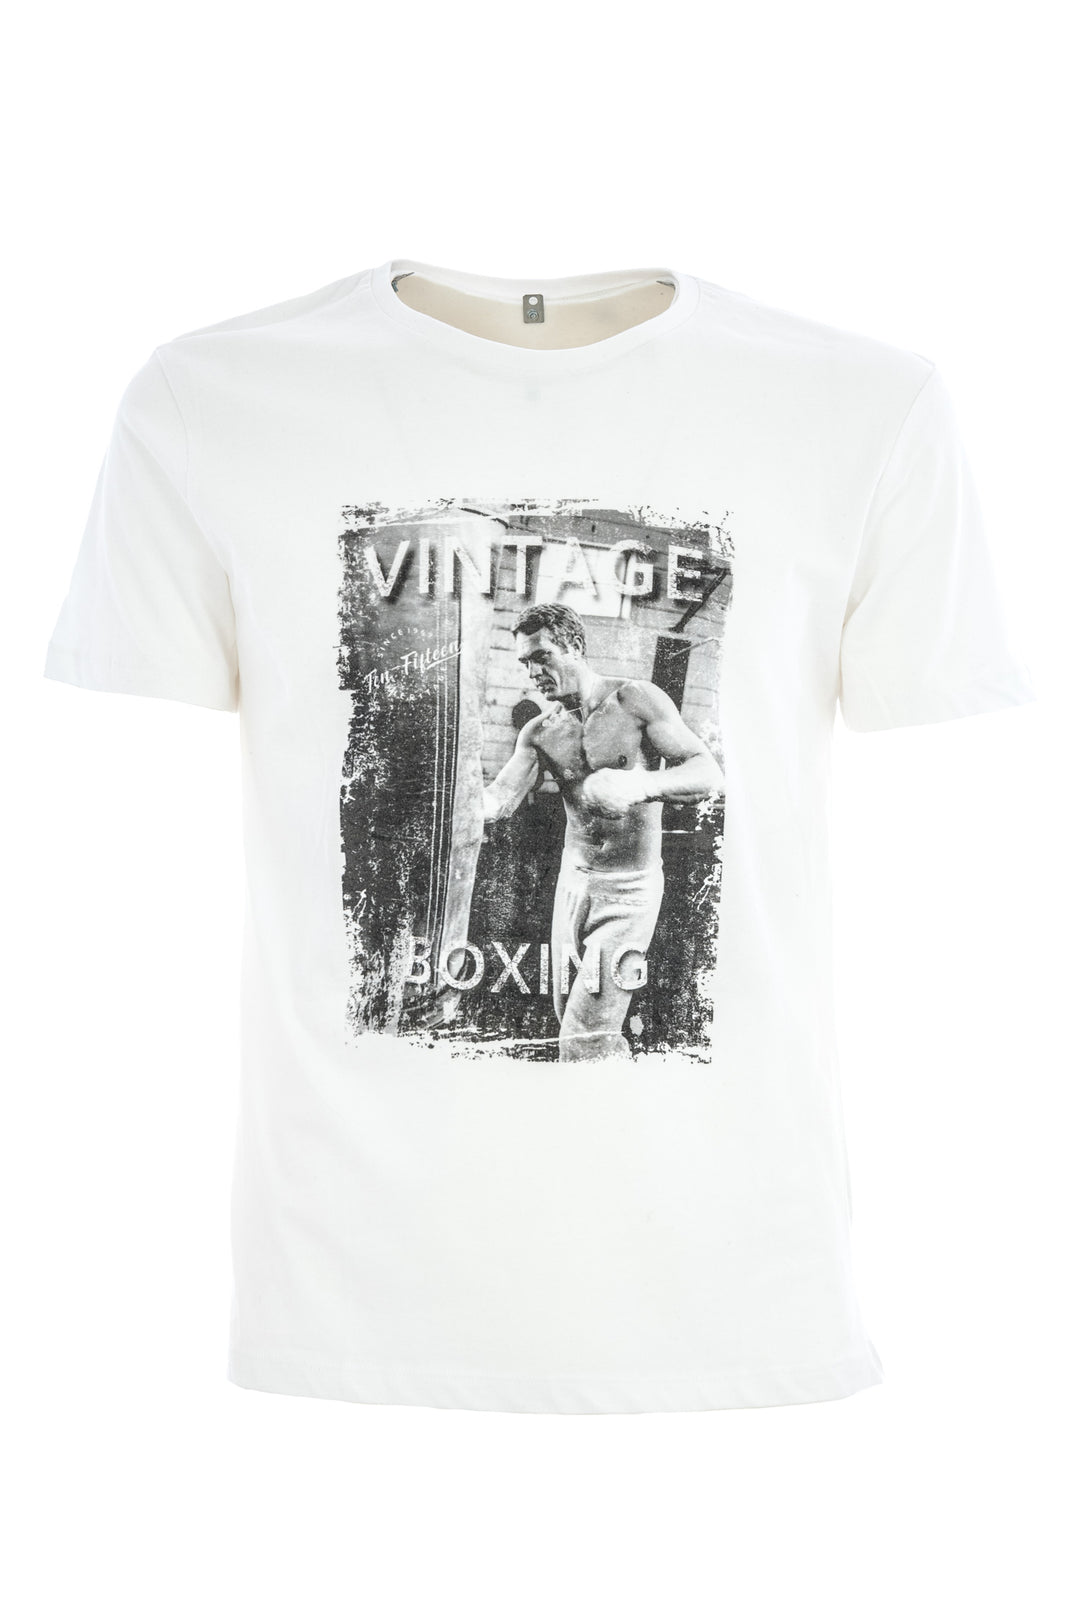 TEN-FIFTEEN T-shirt bianca in cotone con stampa boxing - Mancinelli 1954